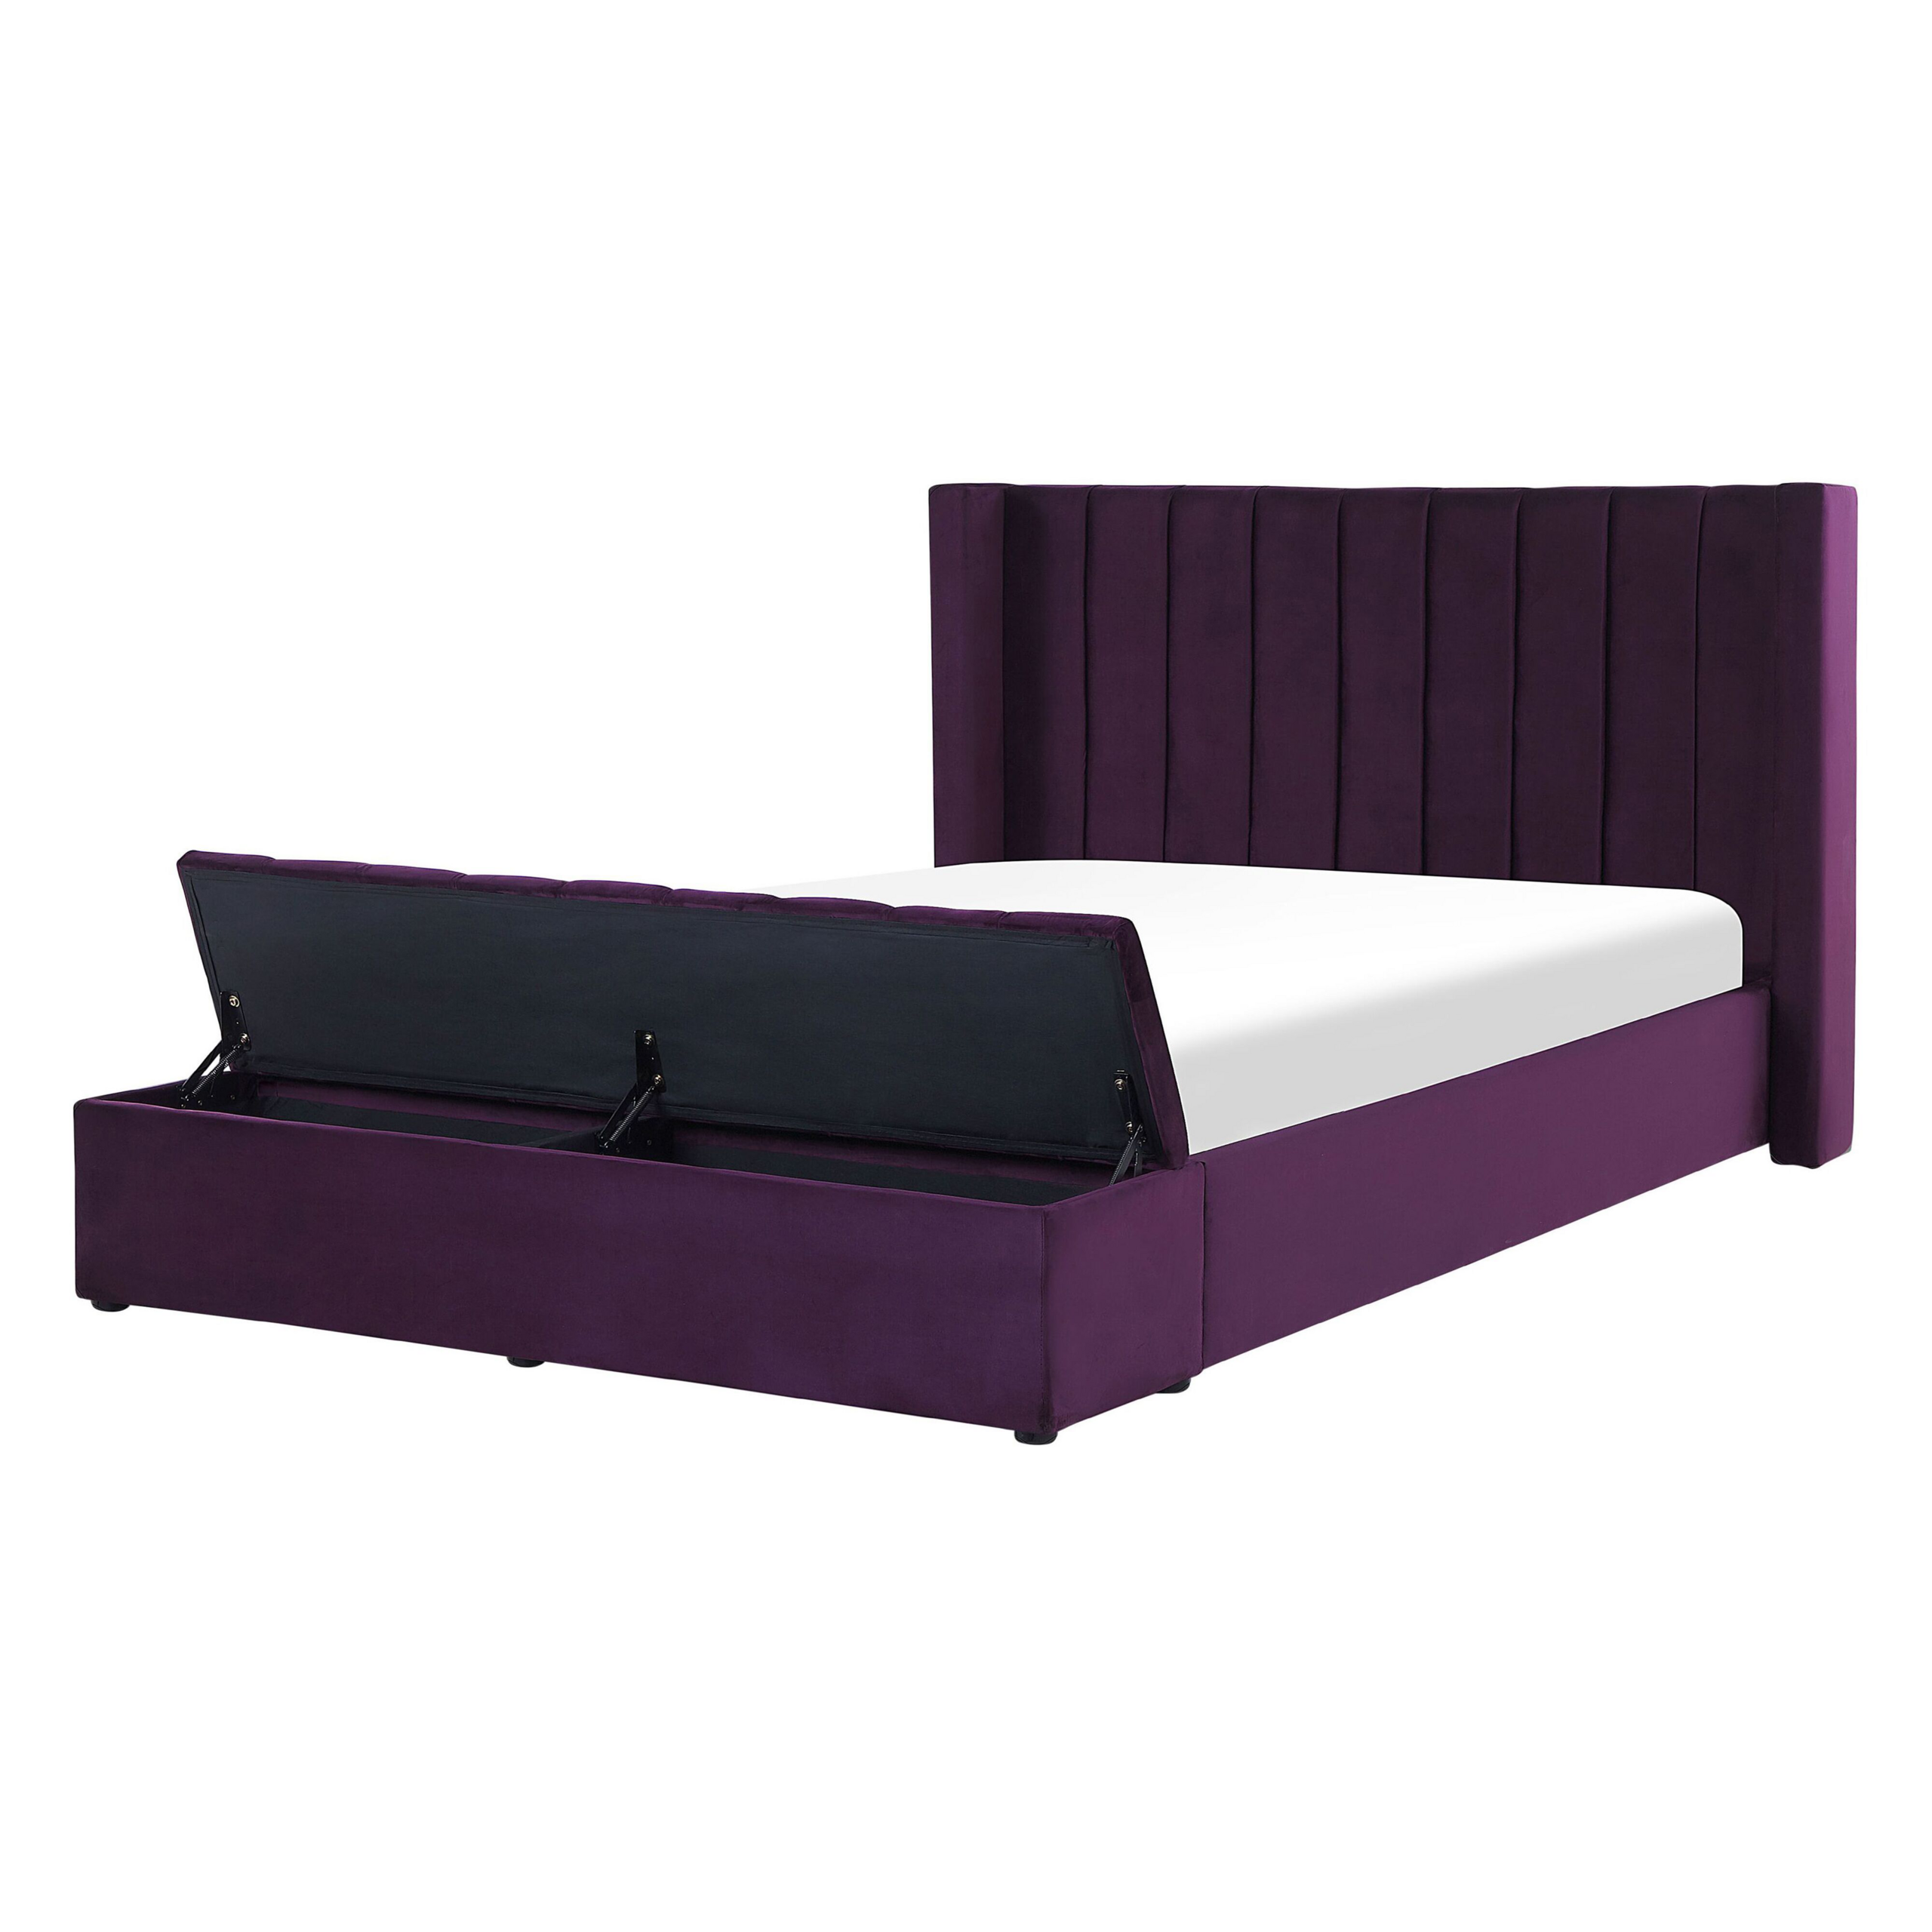 Beliani EU Double Size Panel Bed Violet Velvet 4ft6 Slatted Base High Headrest with Storage Bench